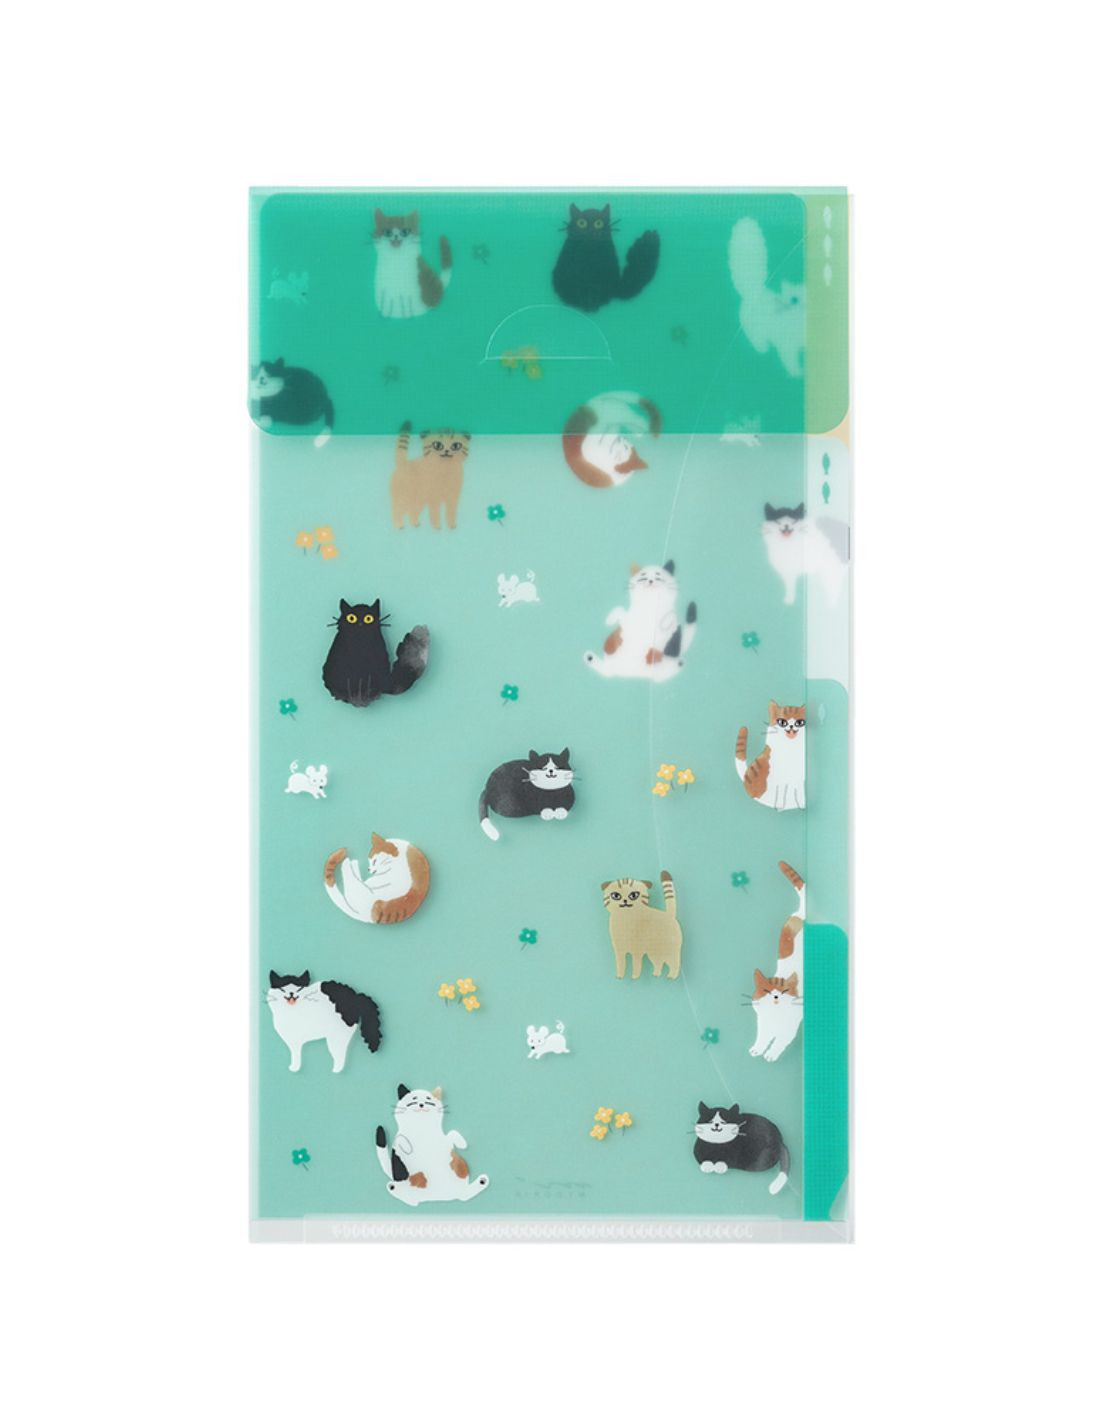 Midori 3 Pockets Clear Folder A5 Slim with Flap - Cats